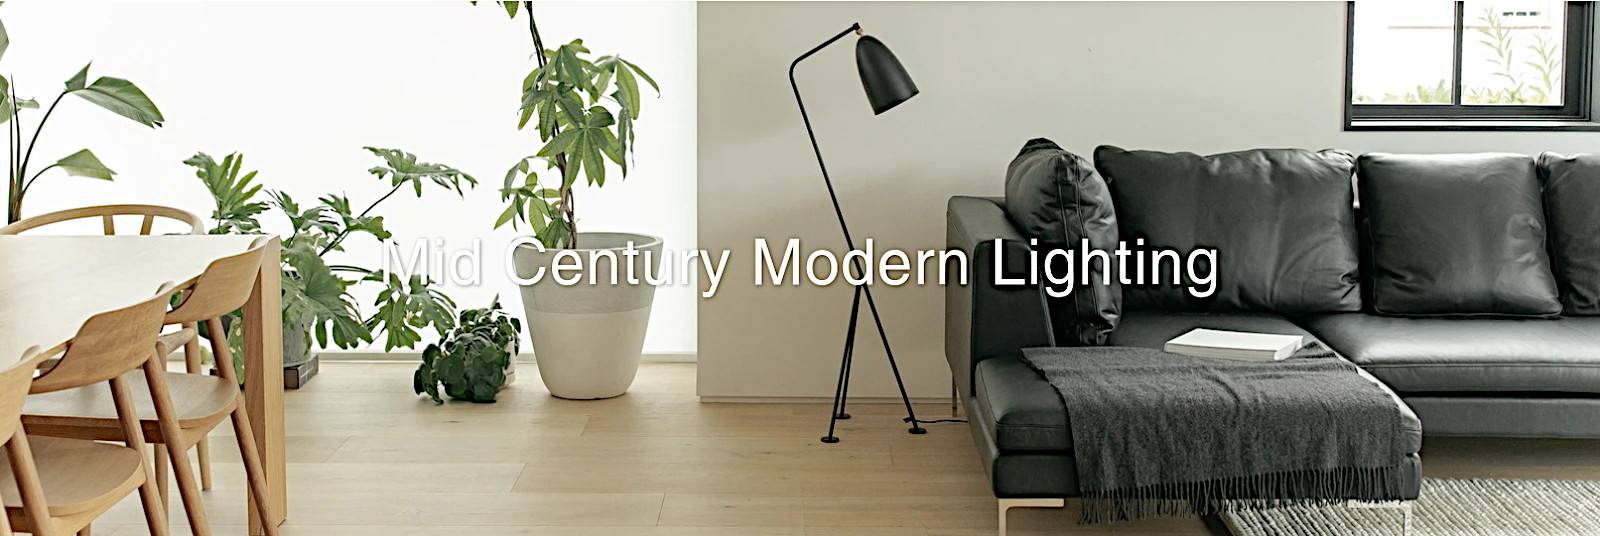 mid century modern lighting deal